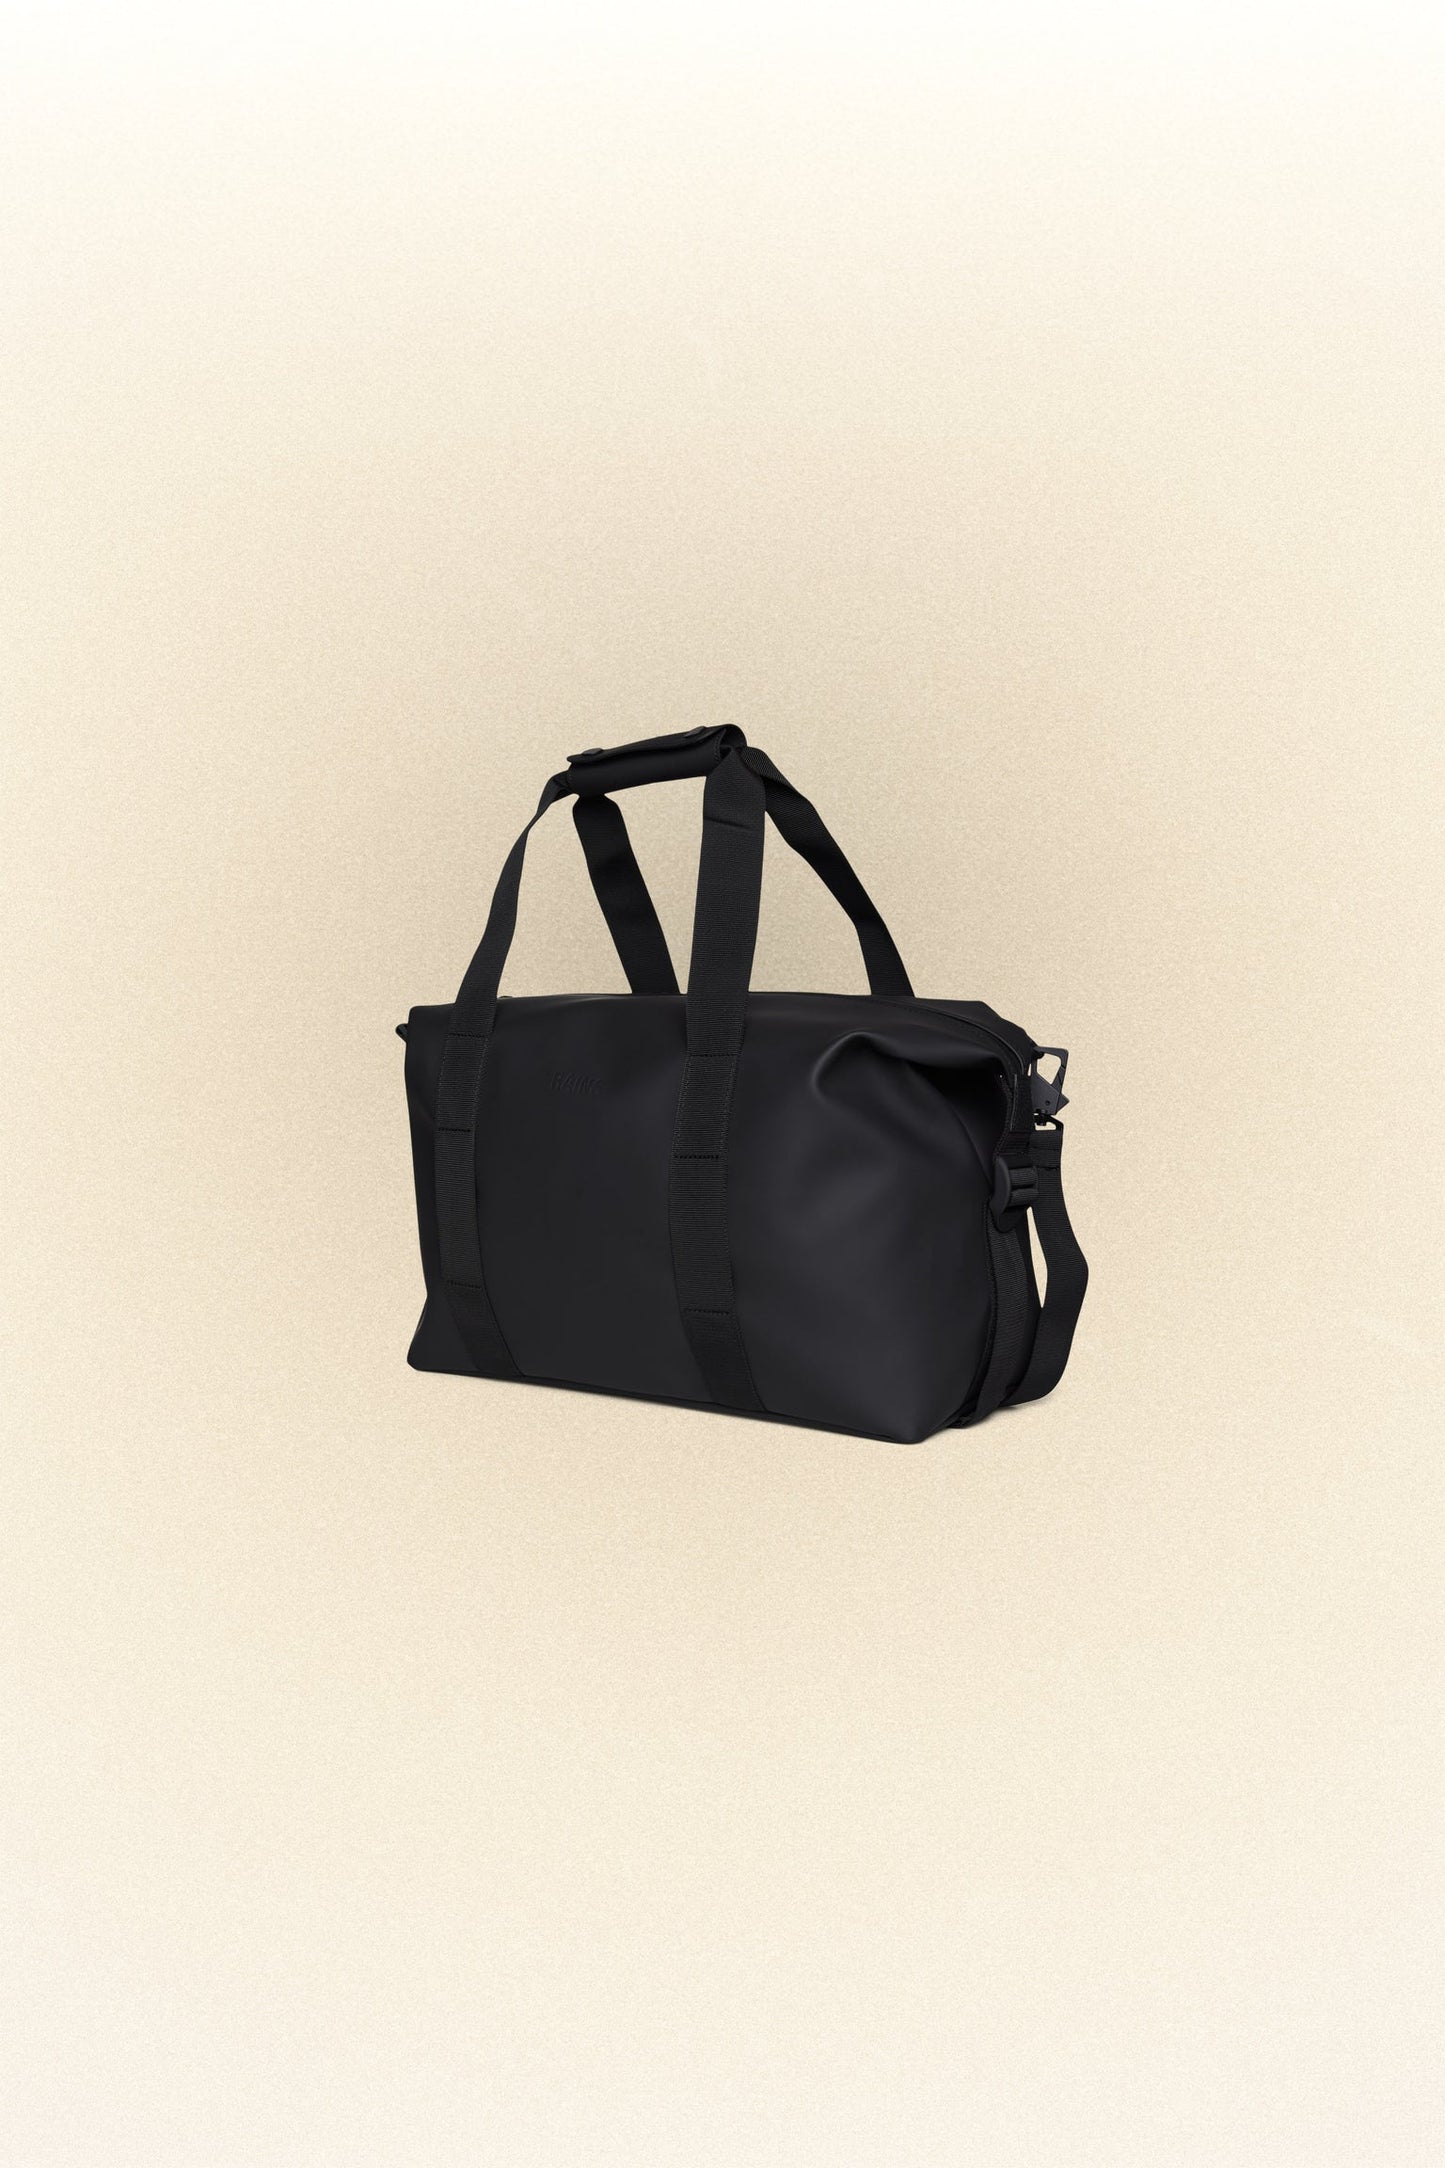 
                  
                    Mochila Weekend Bag Small W3 14220 - Black
                  
                